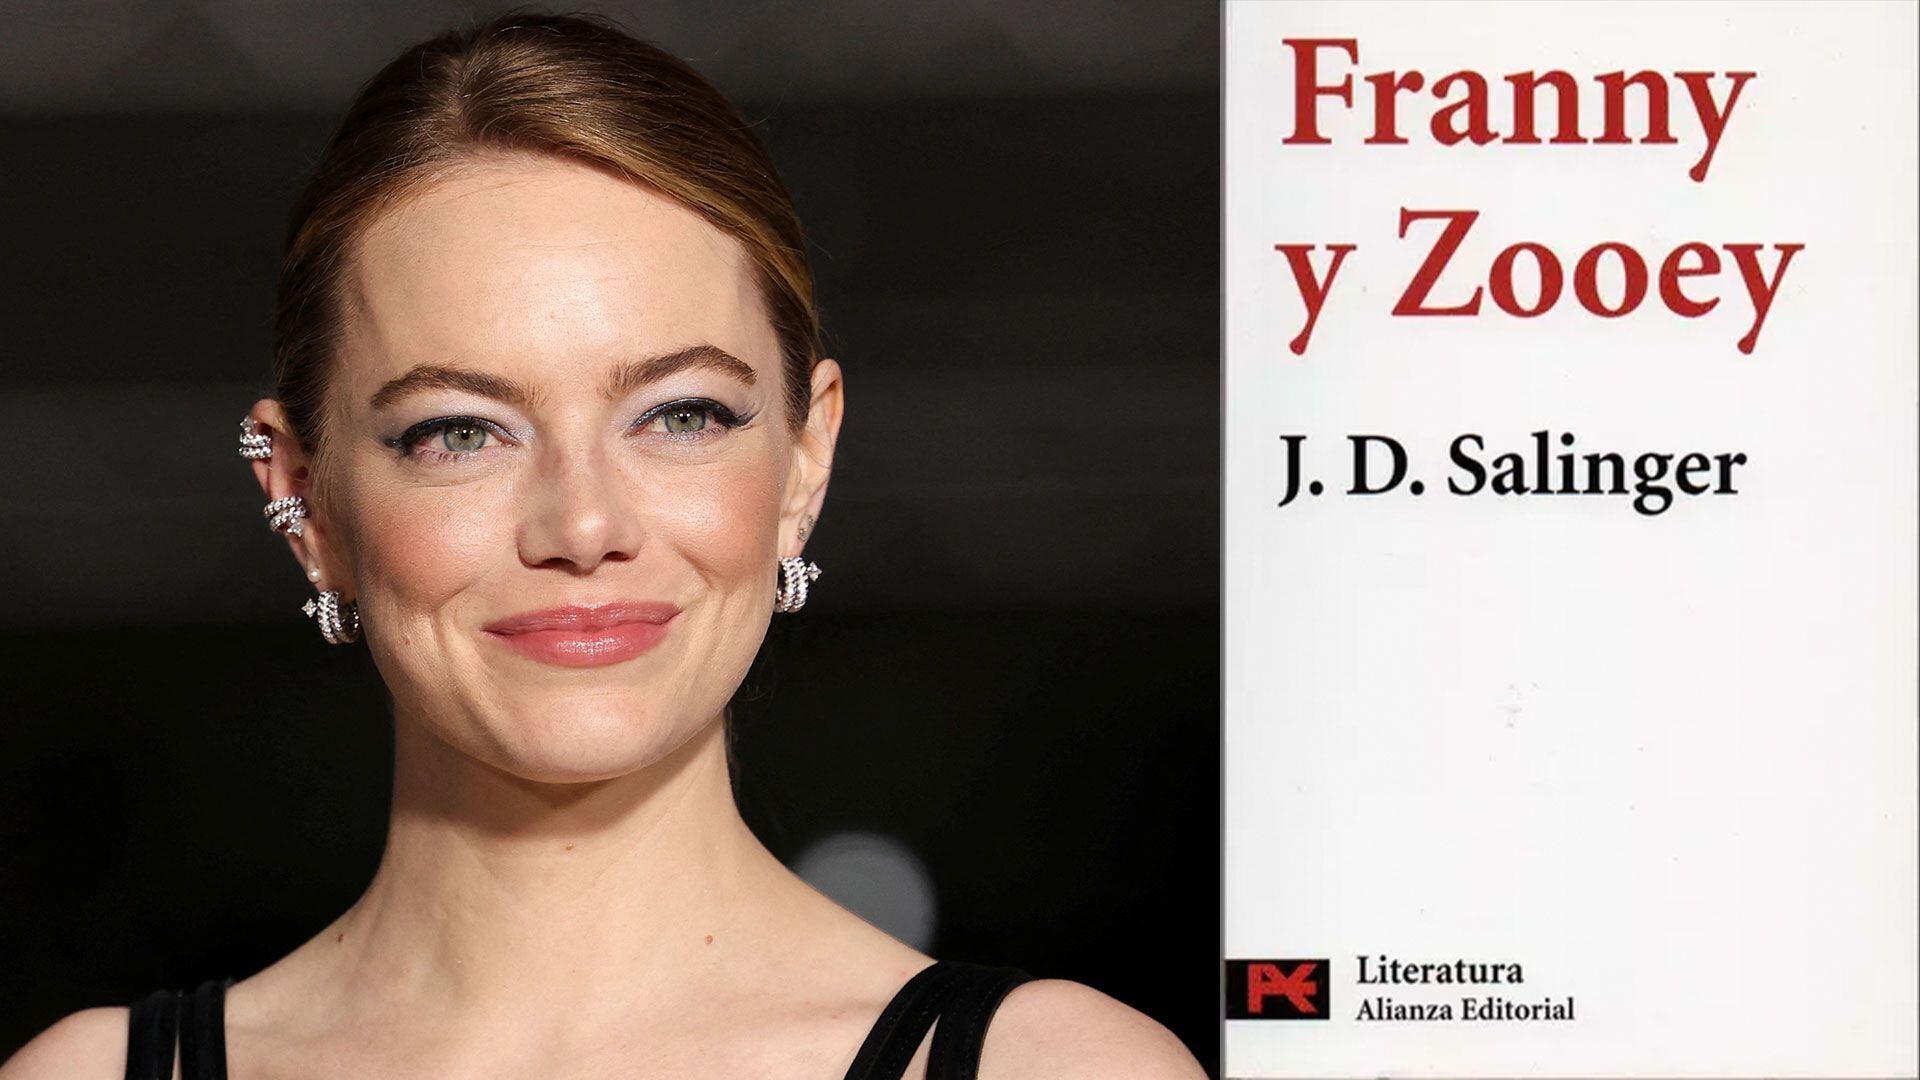 Emma Stone - “Franny y Zooey” (J.D. Salinger)